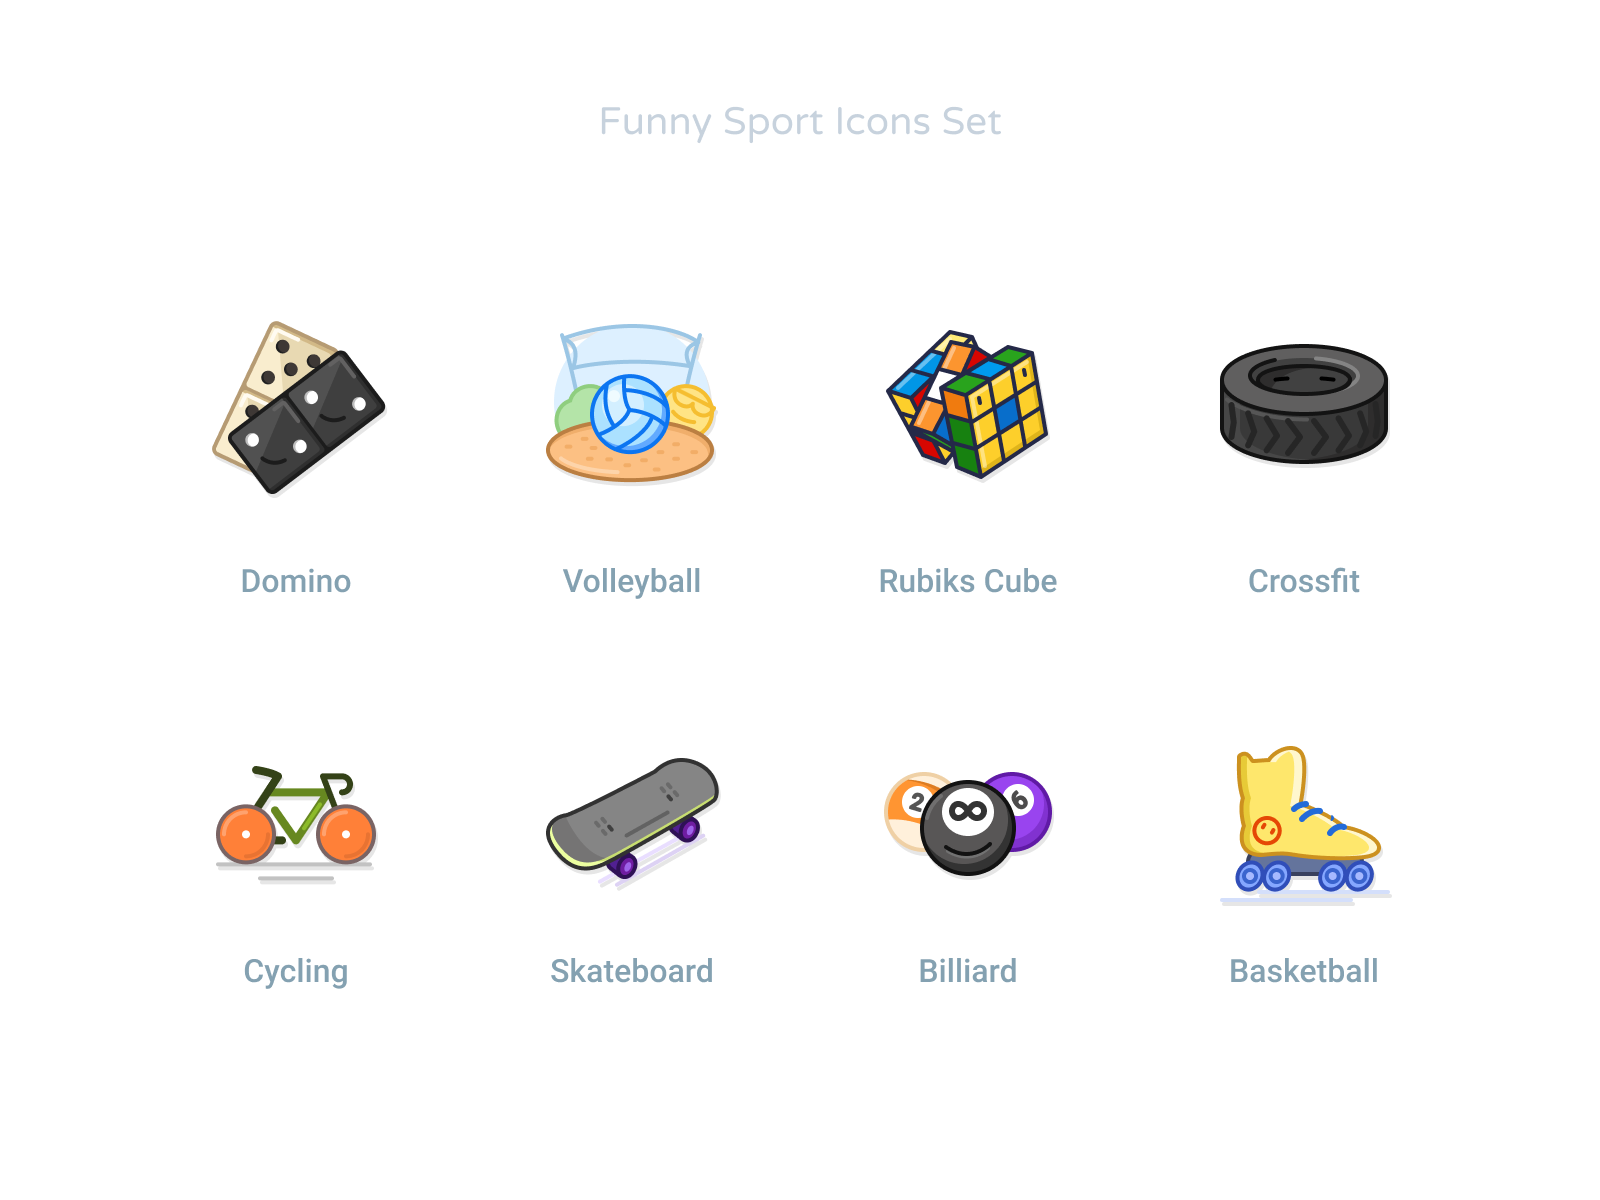 Funny Sport Icons Set #4 baseball basketball billiard crossfit cube cycling domino emoji faces games icon icondesign iconet icons iconset rubik skateboard skile sports vollyball